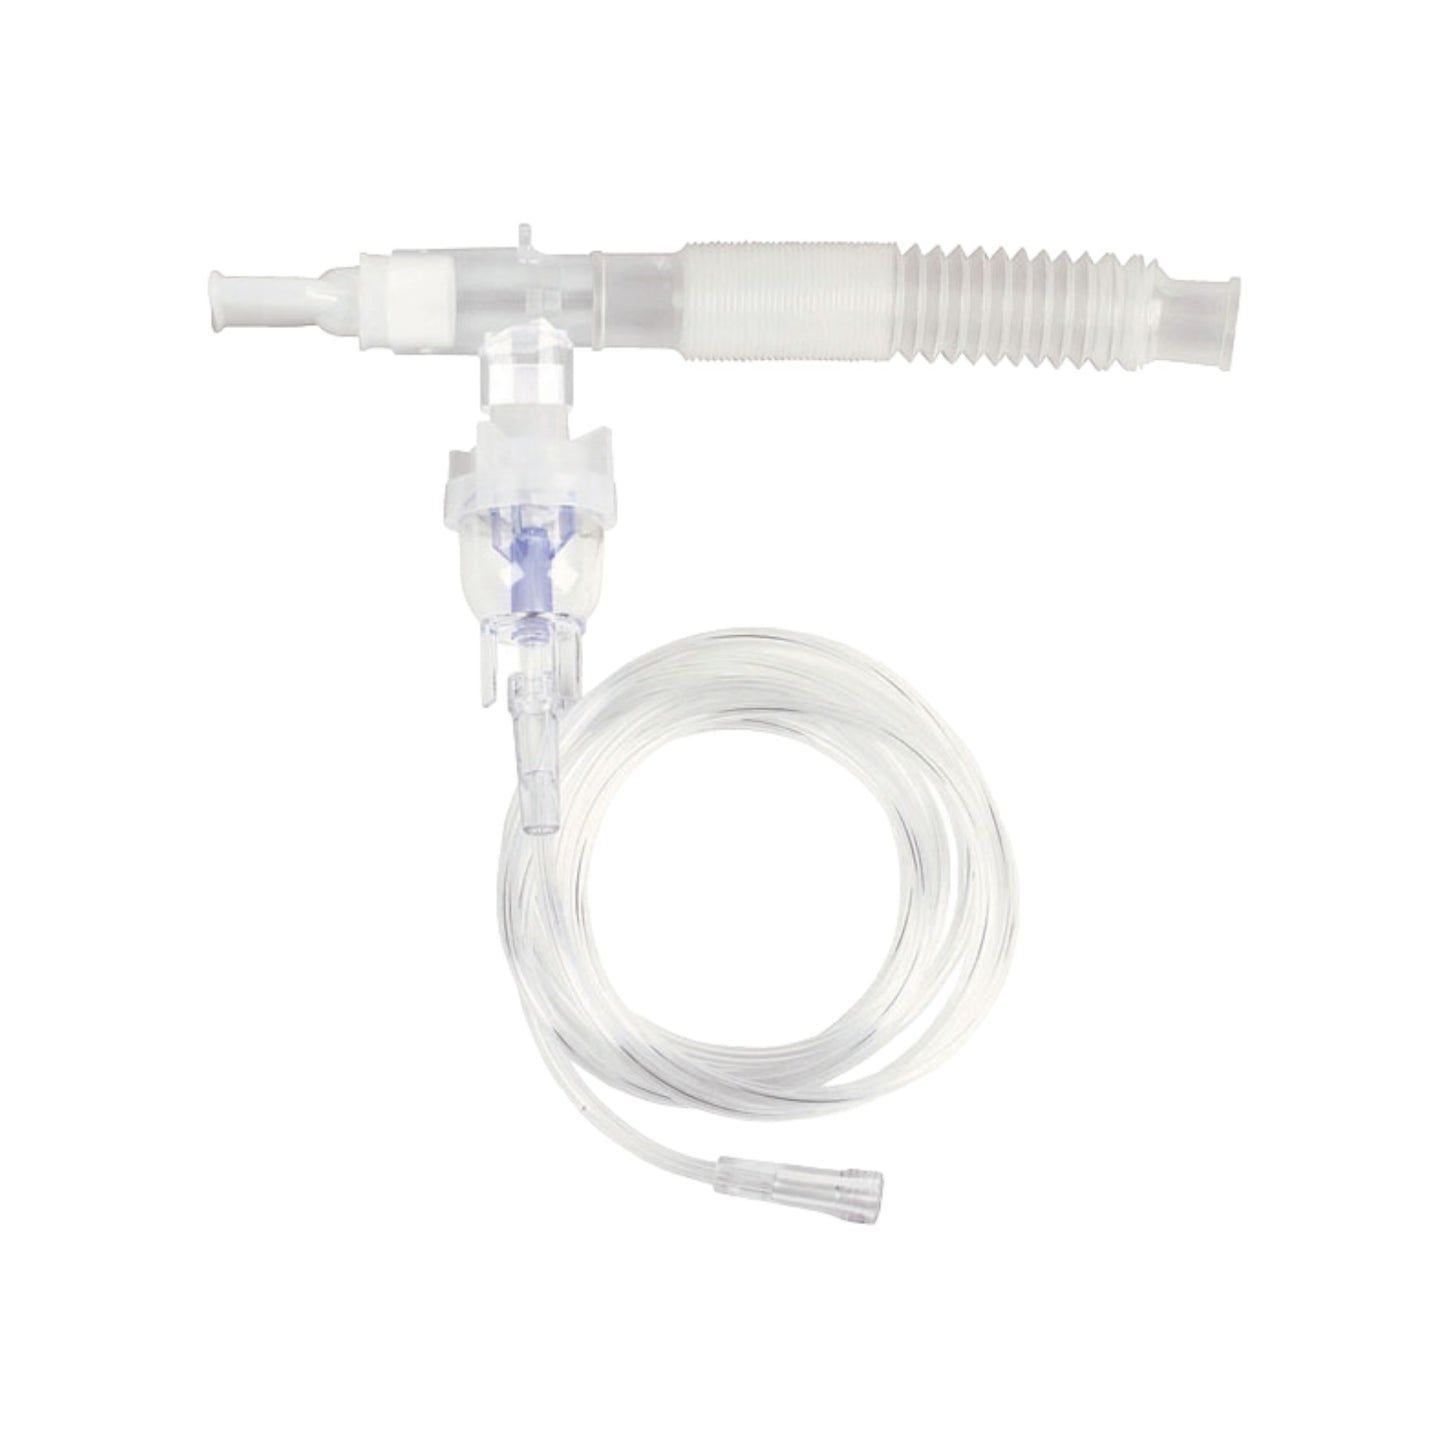 Nebulizer Kit Tee Adapter for compressor nebulizers